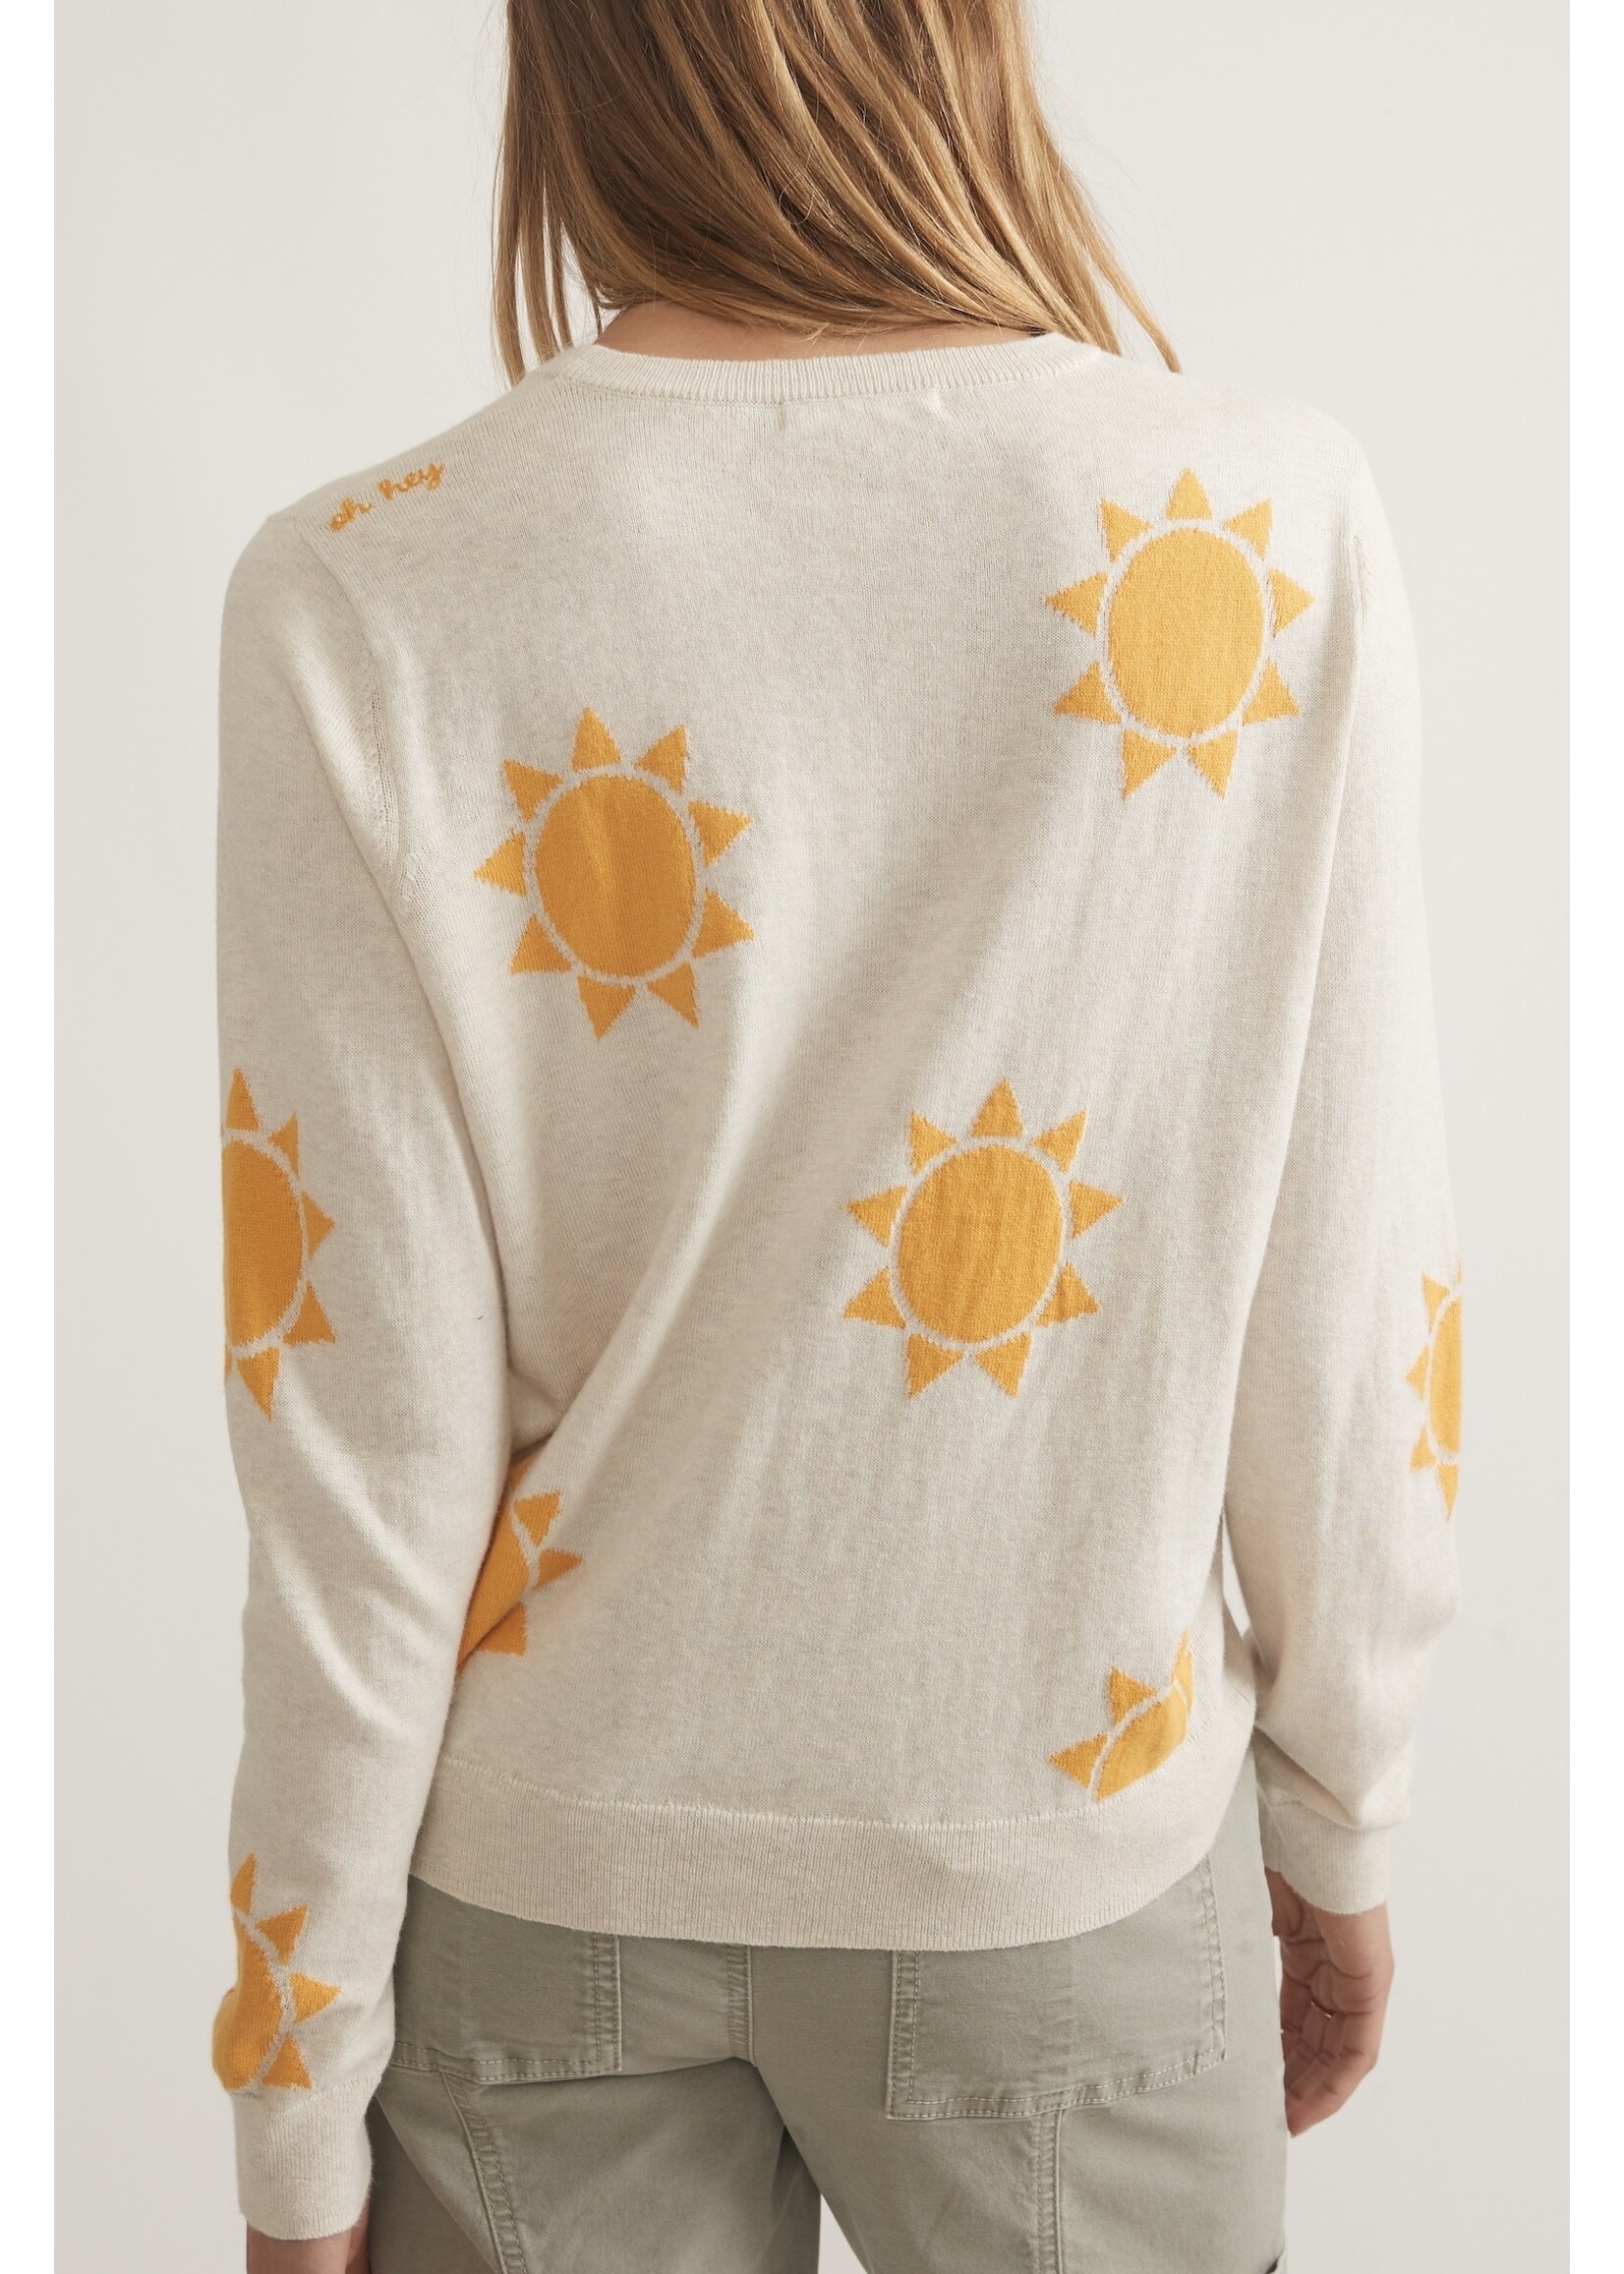 Marine Layer Icon Sweater Sun Print Sun